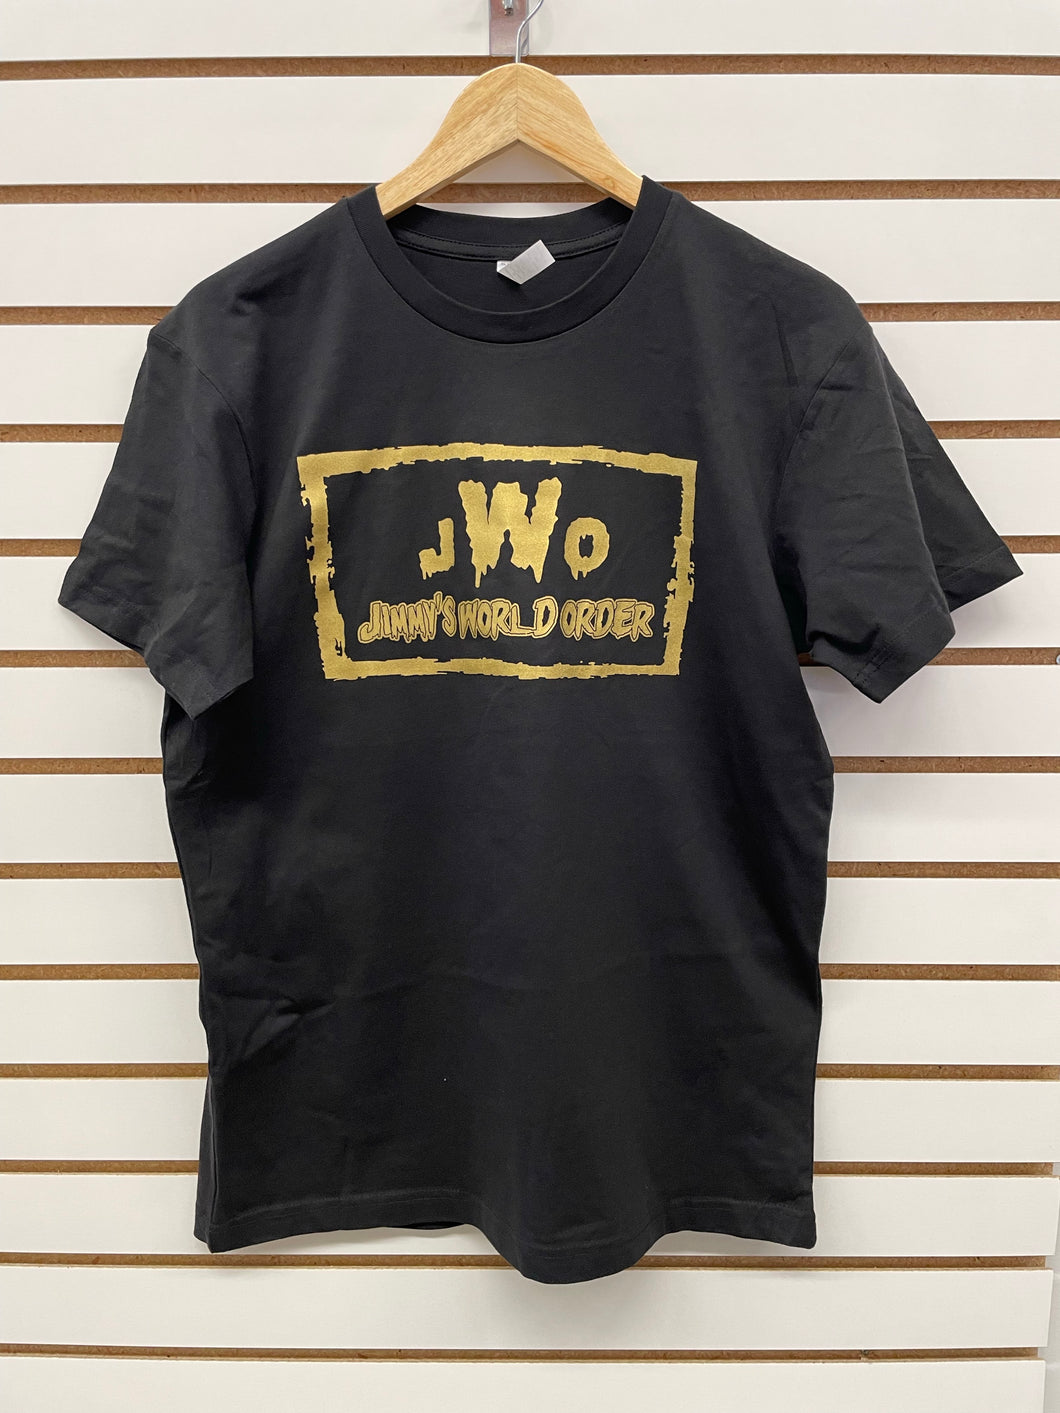 Jimmy’s World Order jWo Gold T- Shirt